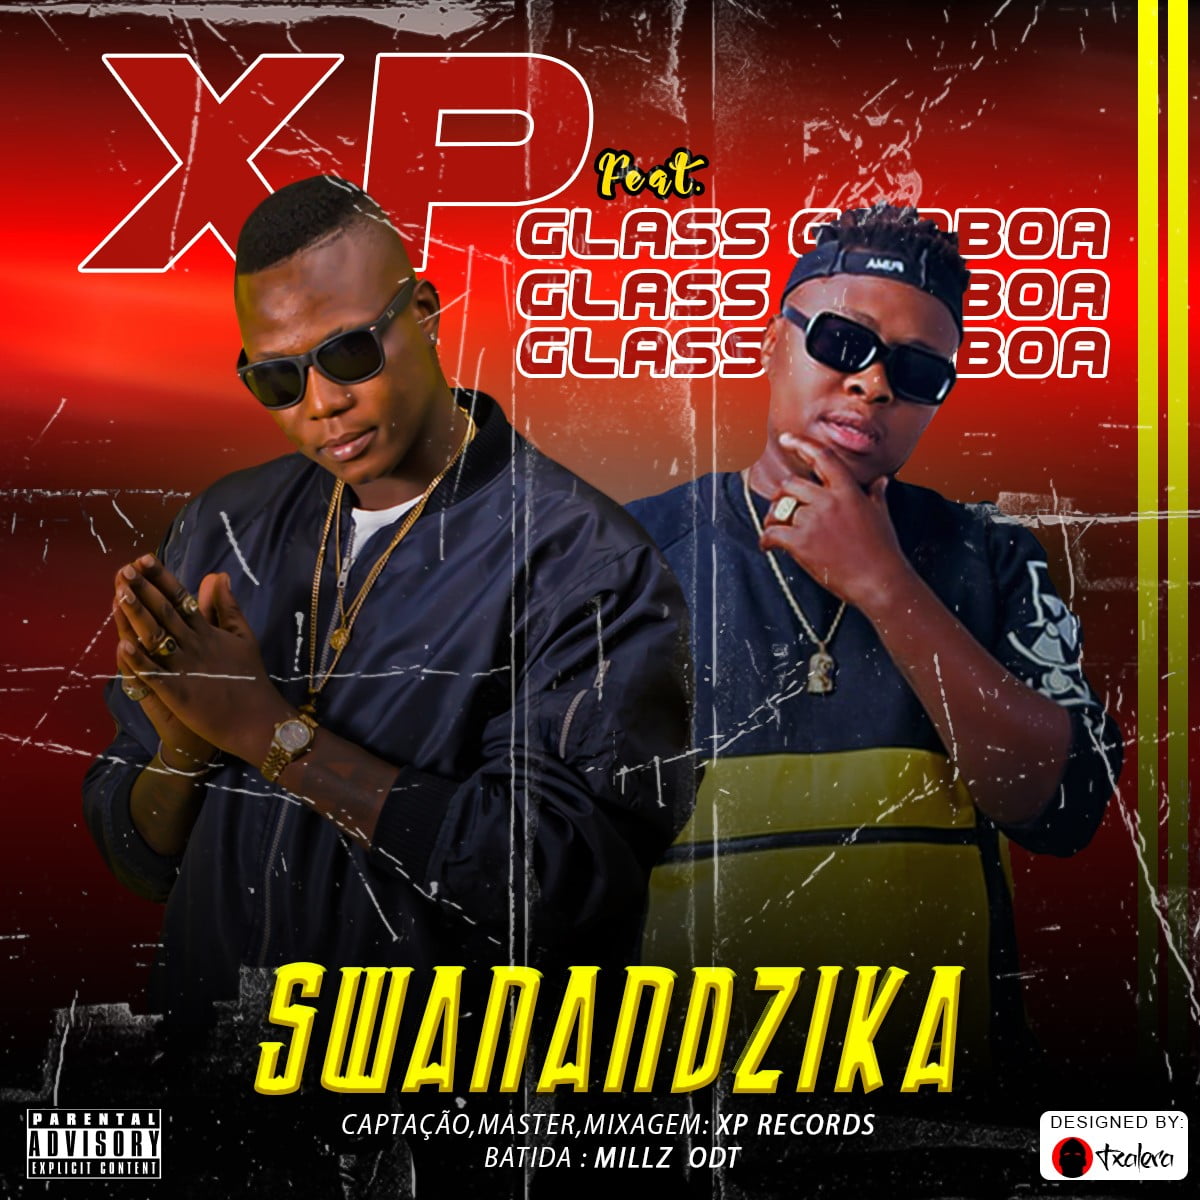 XP - Swanandzika (feat. Glass Gamboa)